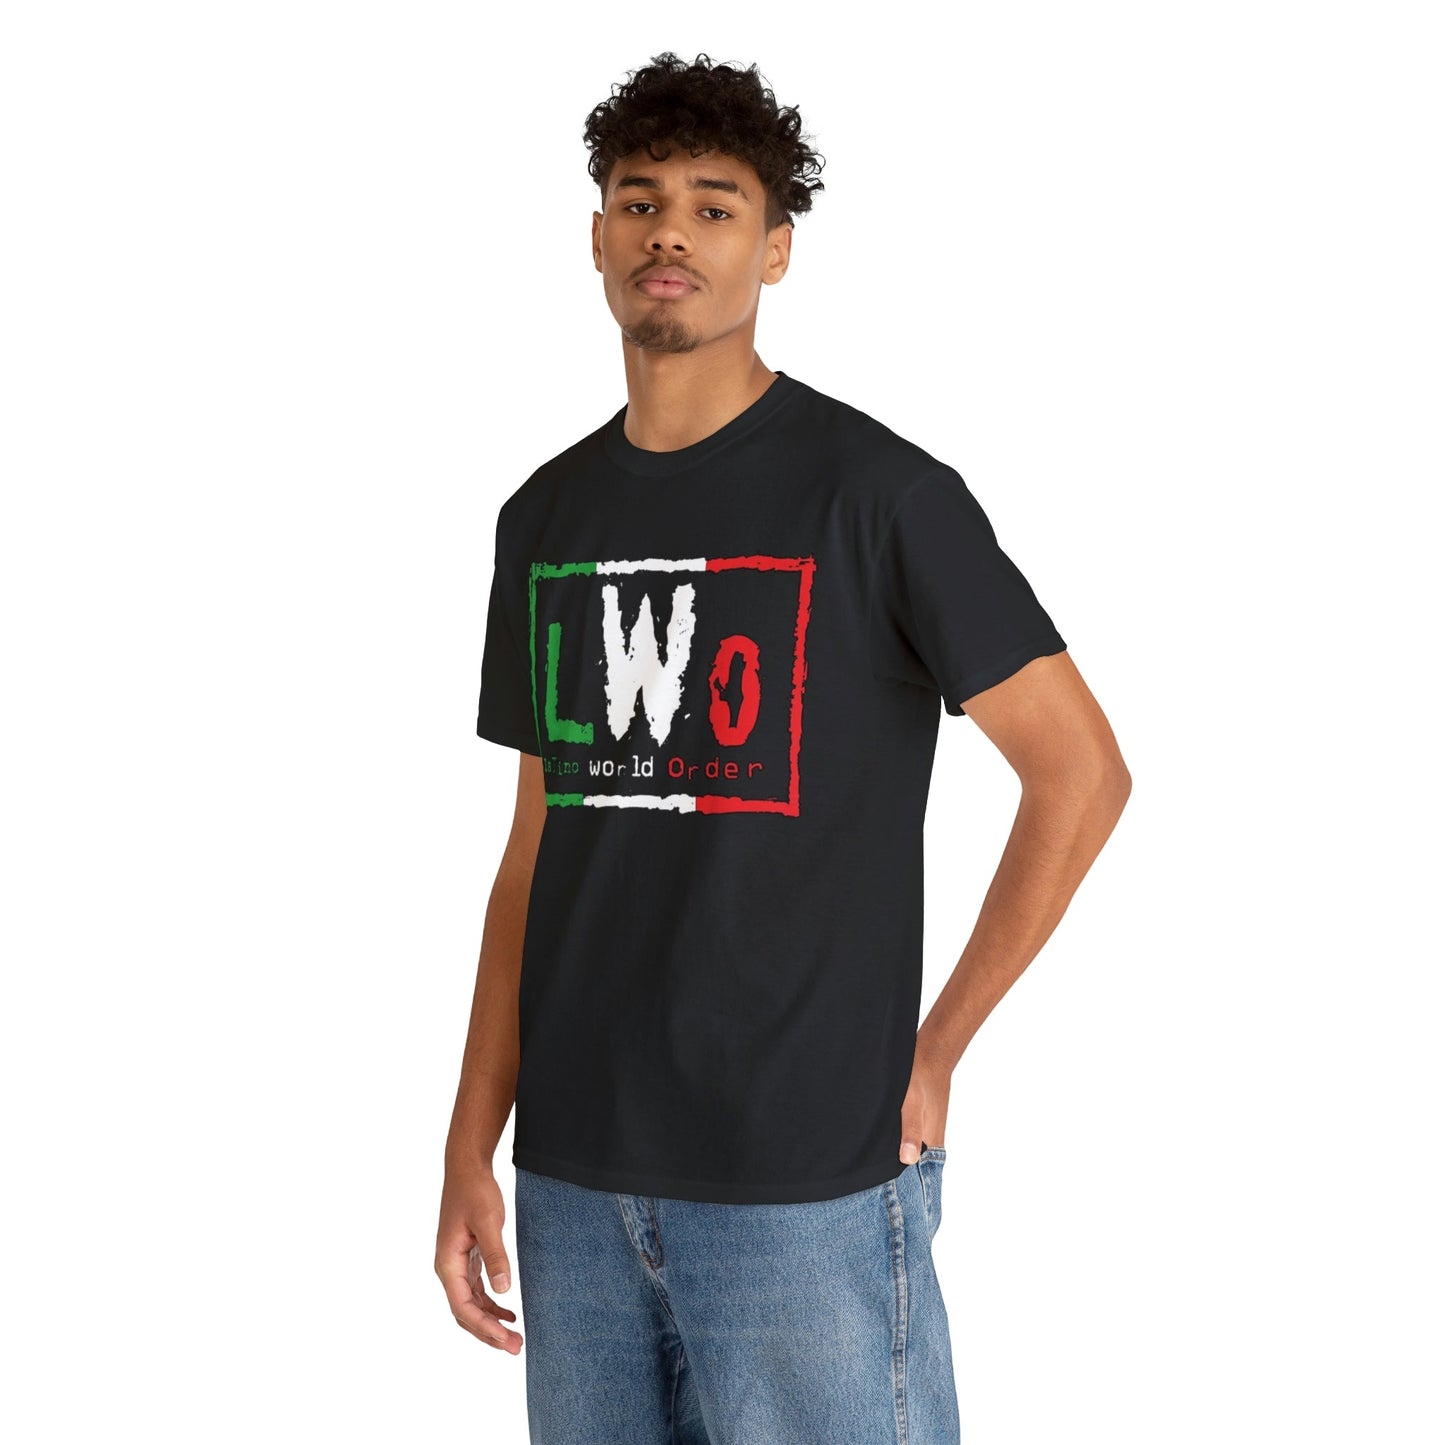 LWO Latino World Order Wresting T-Shirt - RetroTeeShop